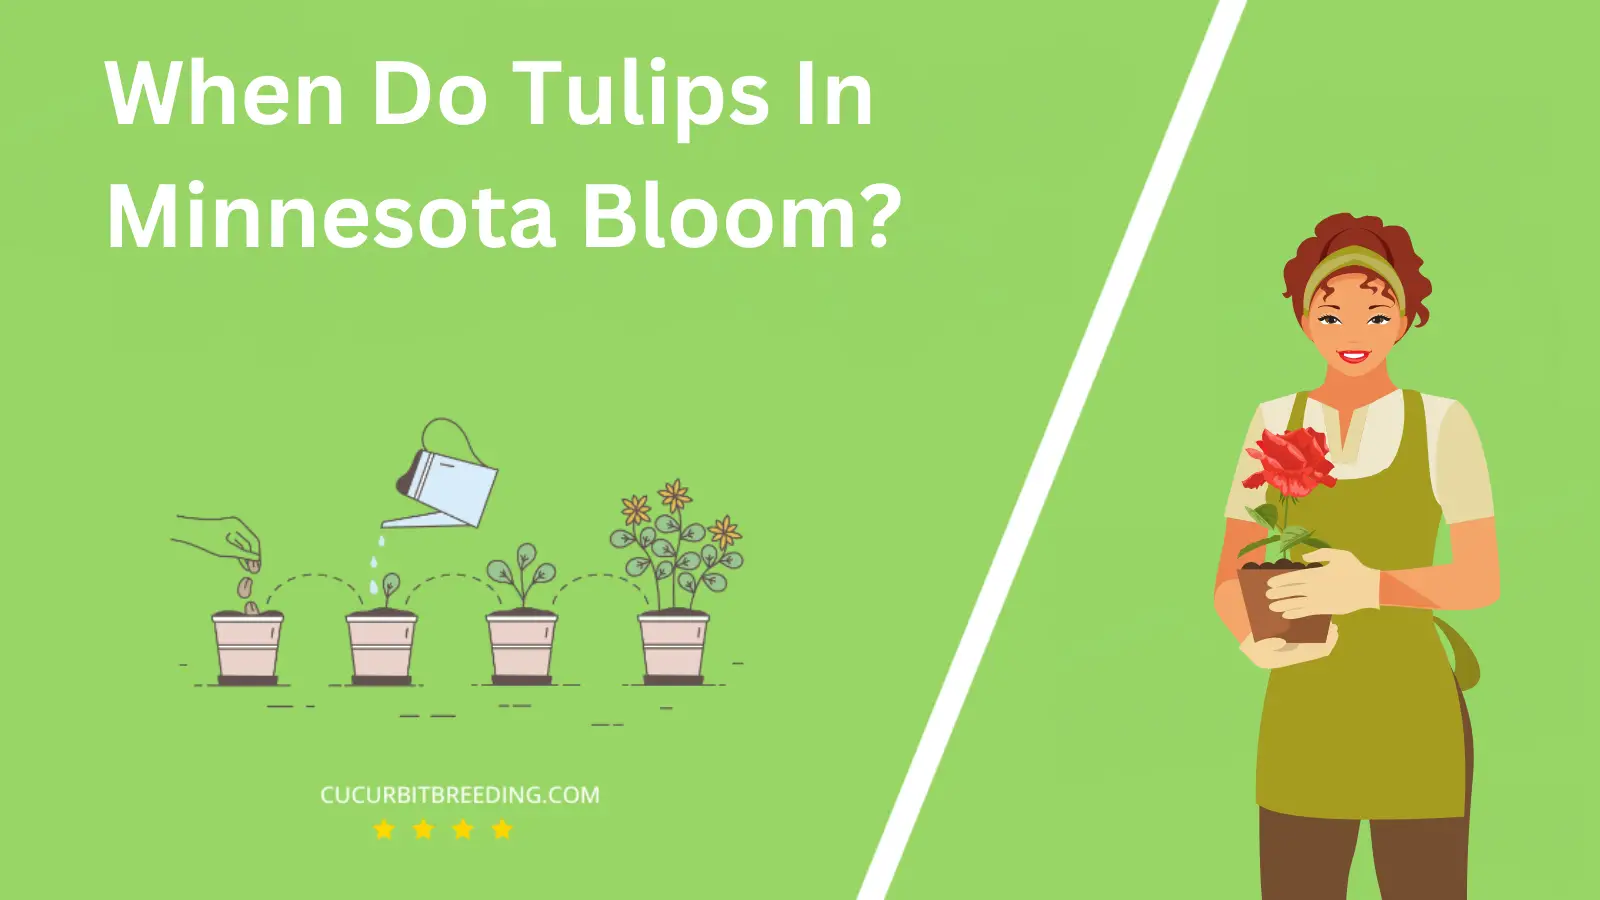 When Do Tulips In Minnesota Bloom?